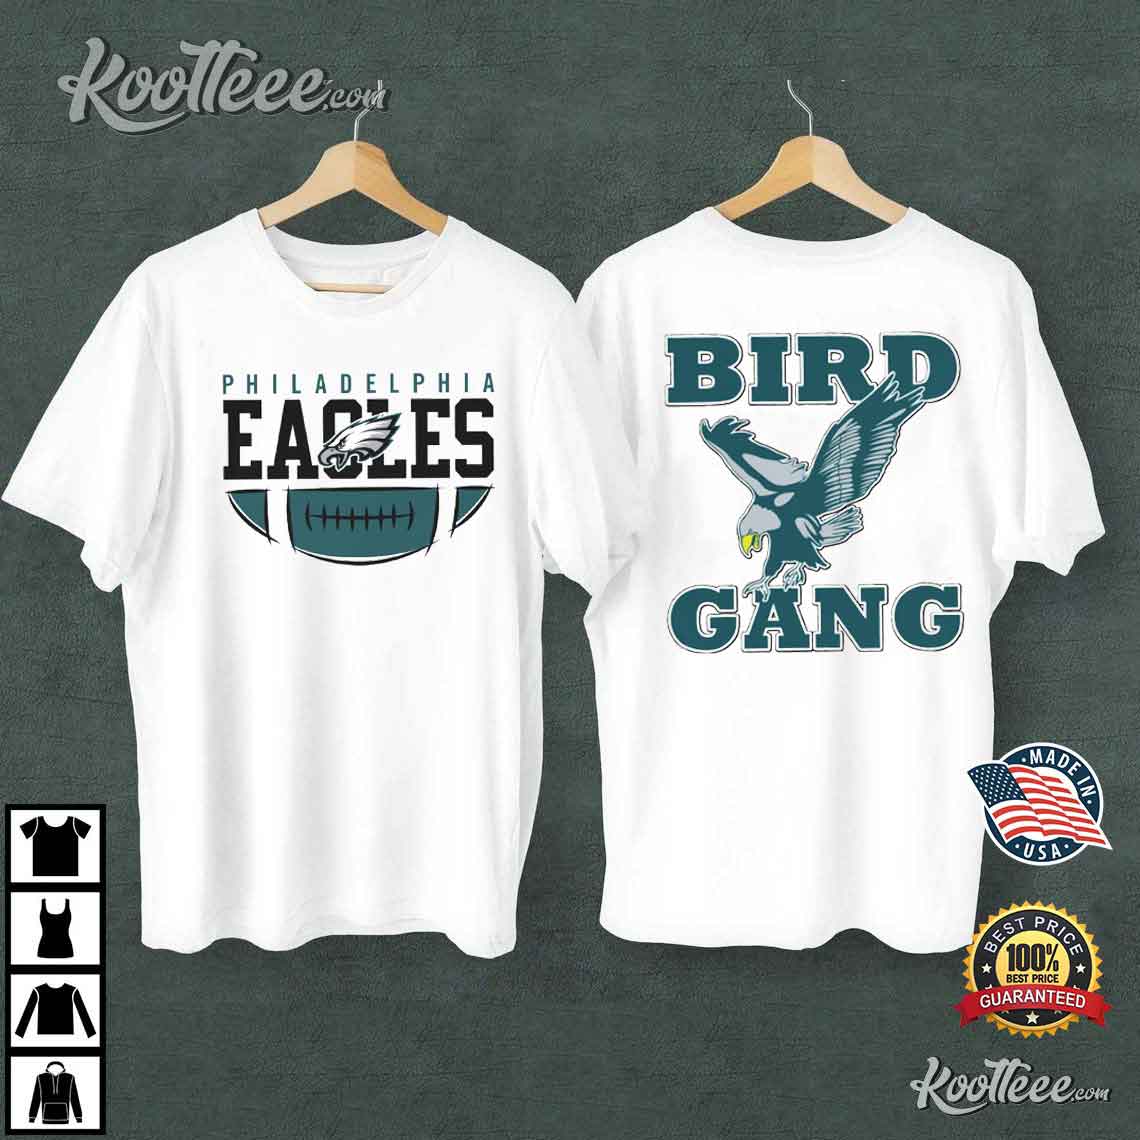 The Best Philadelphia Eagles T-shirts: Choose Your Favorite